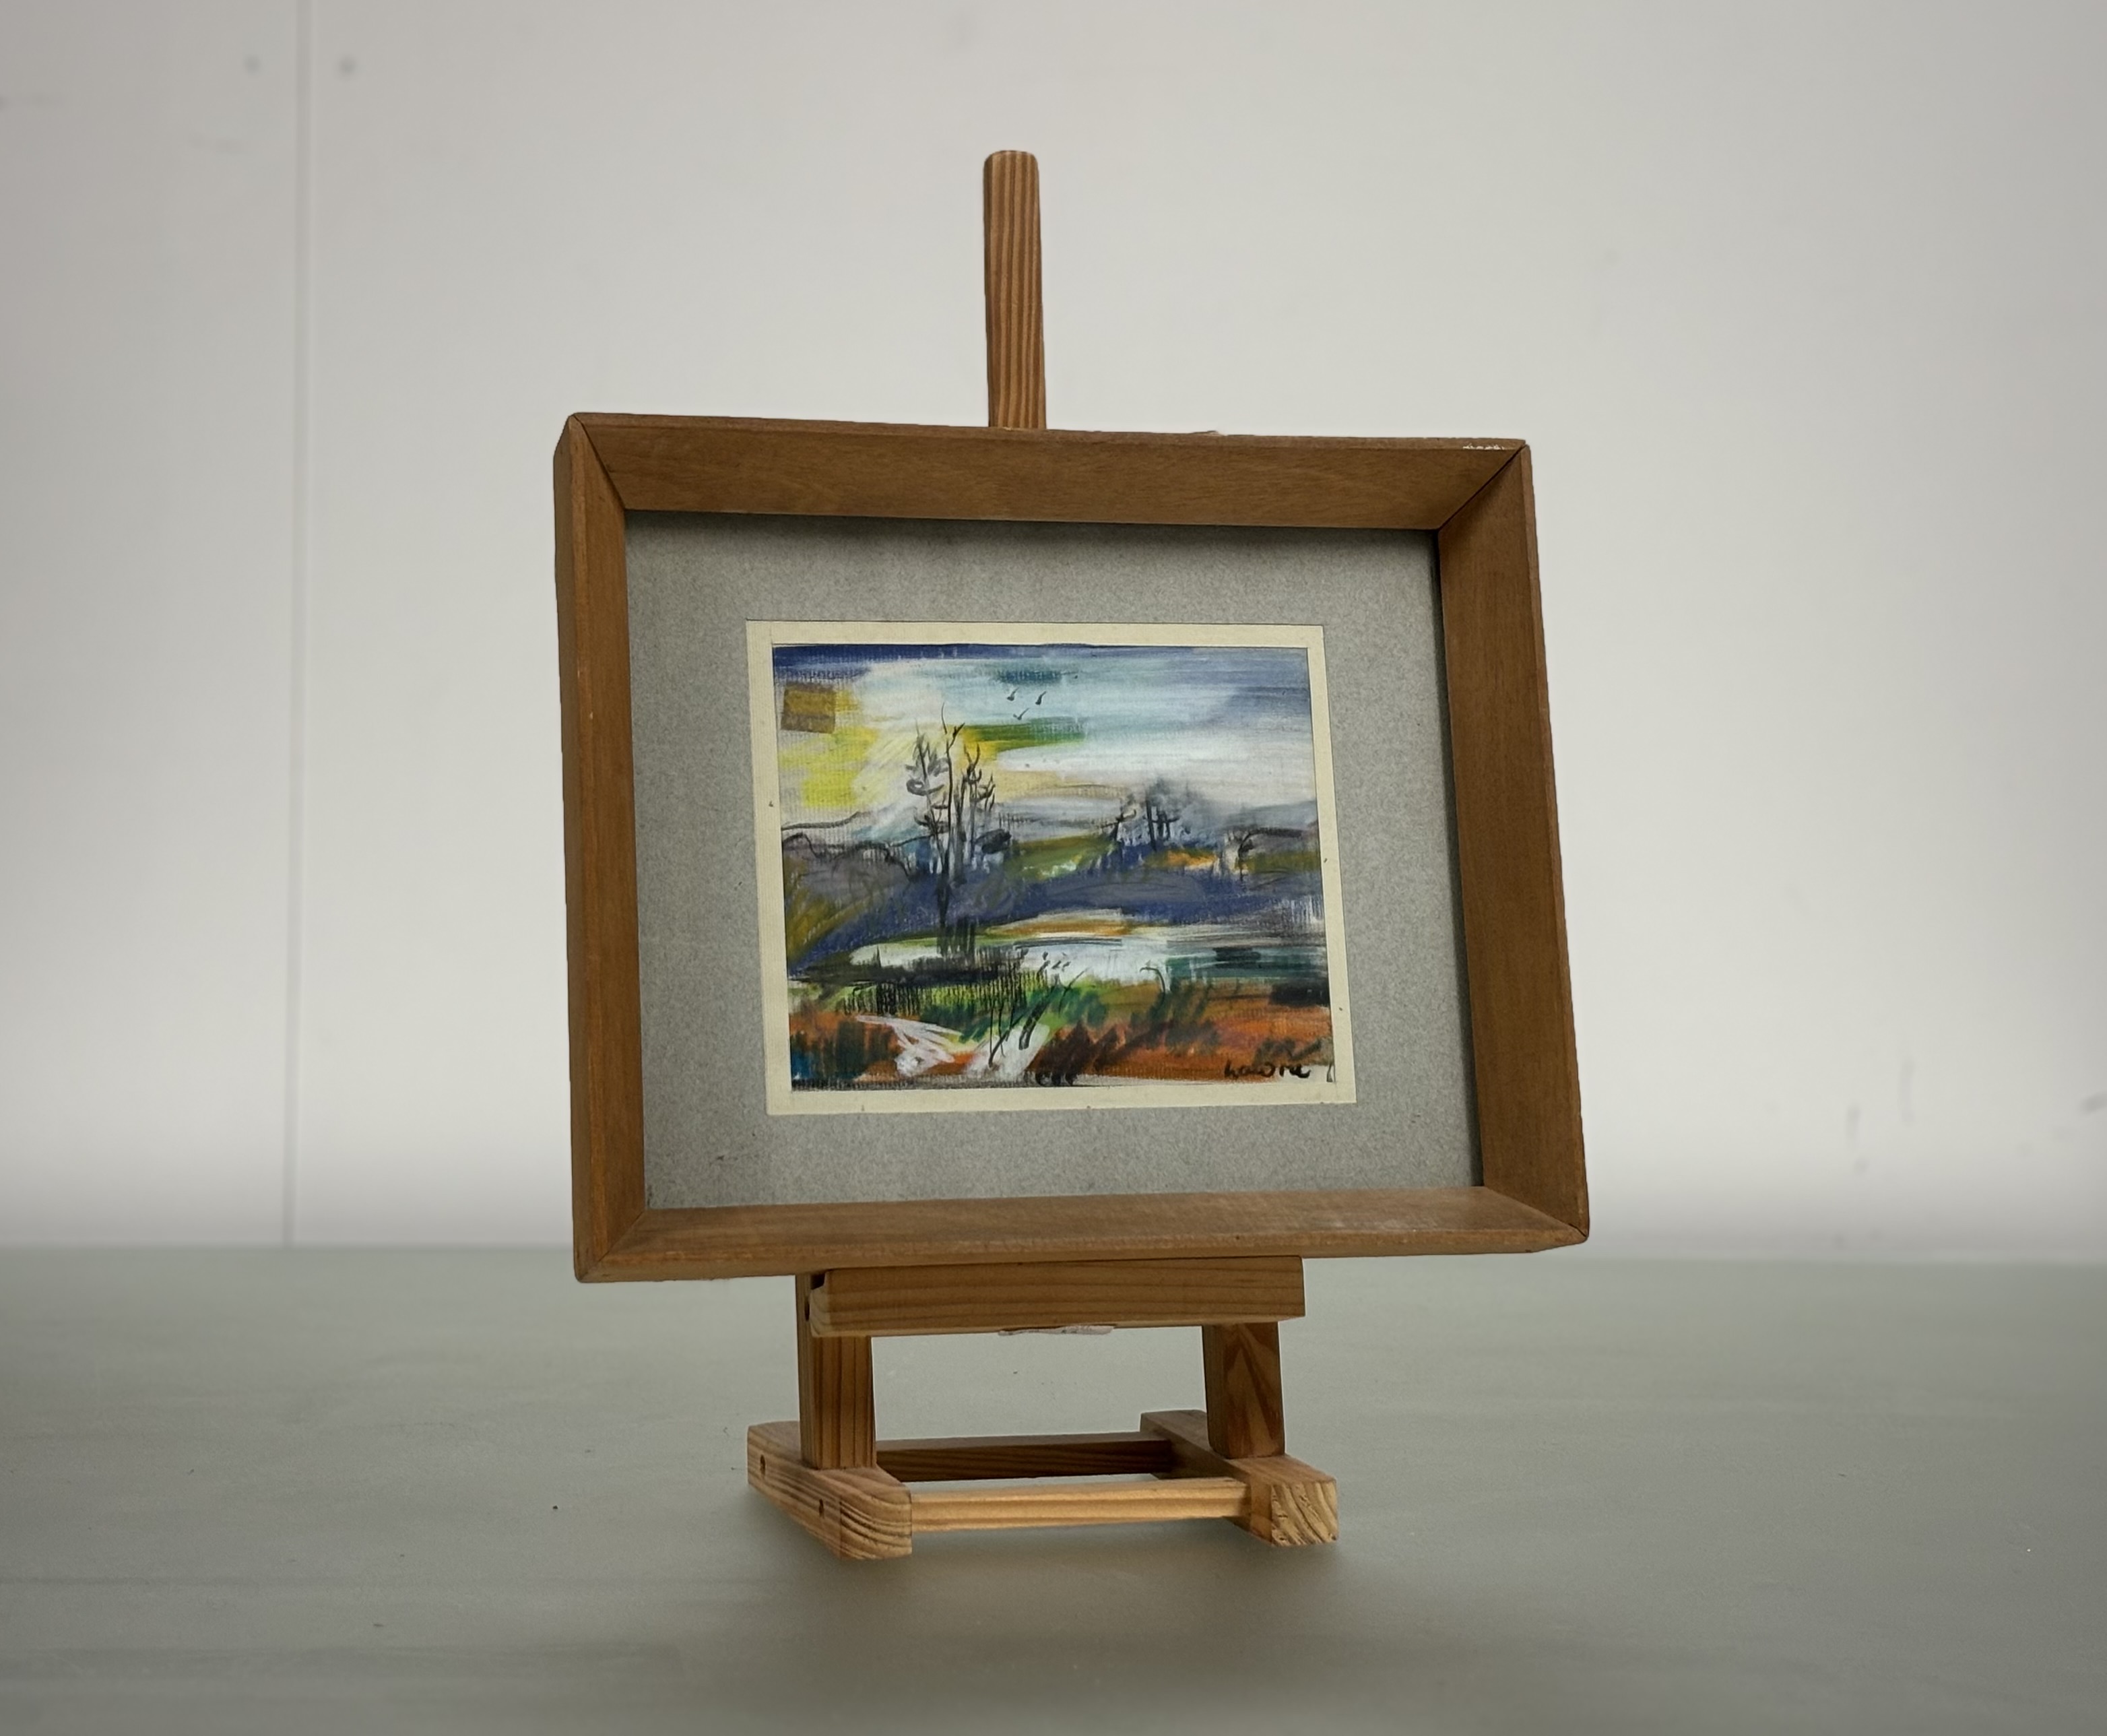 Hamish Lawrie (Scottish, 1919-1987), A Winter Landscape, signed lower right, pastel, framed. 14cm by